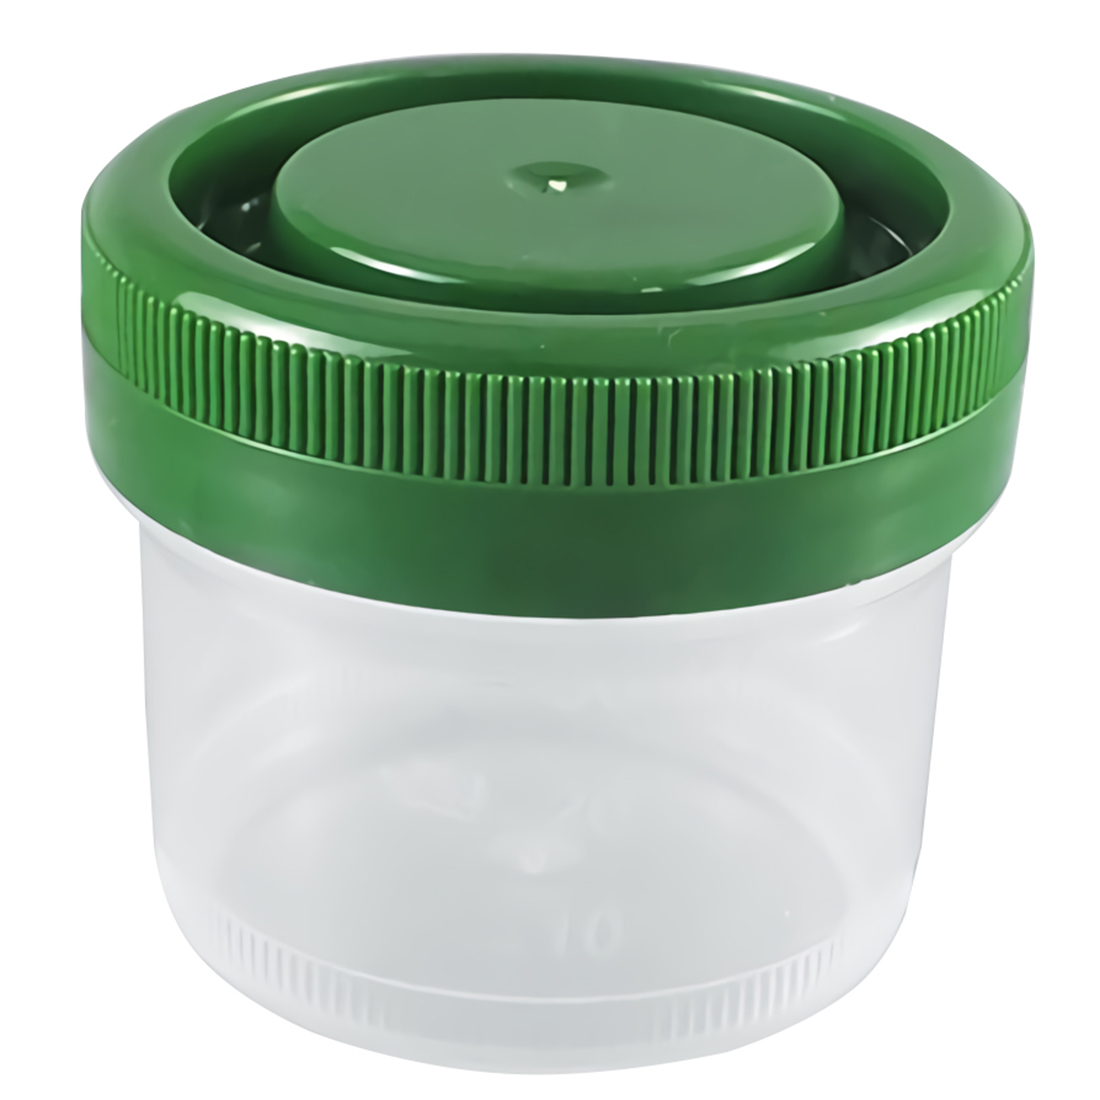 ADAMAS BETA Wholesale PP Plastic Sampling Cup with Screw Cover 40-500ml Non-sterile Repeatable Laboratory Reagent Storage Cups